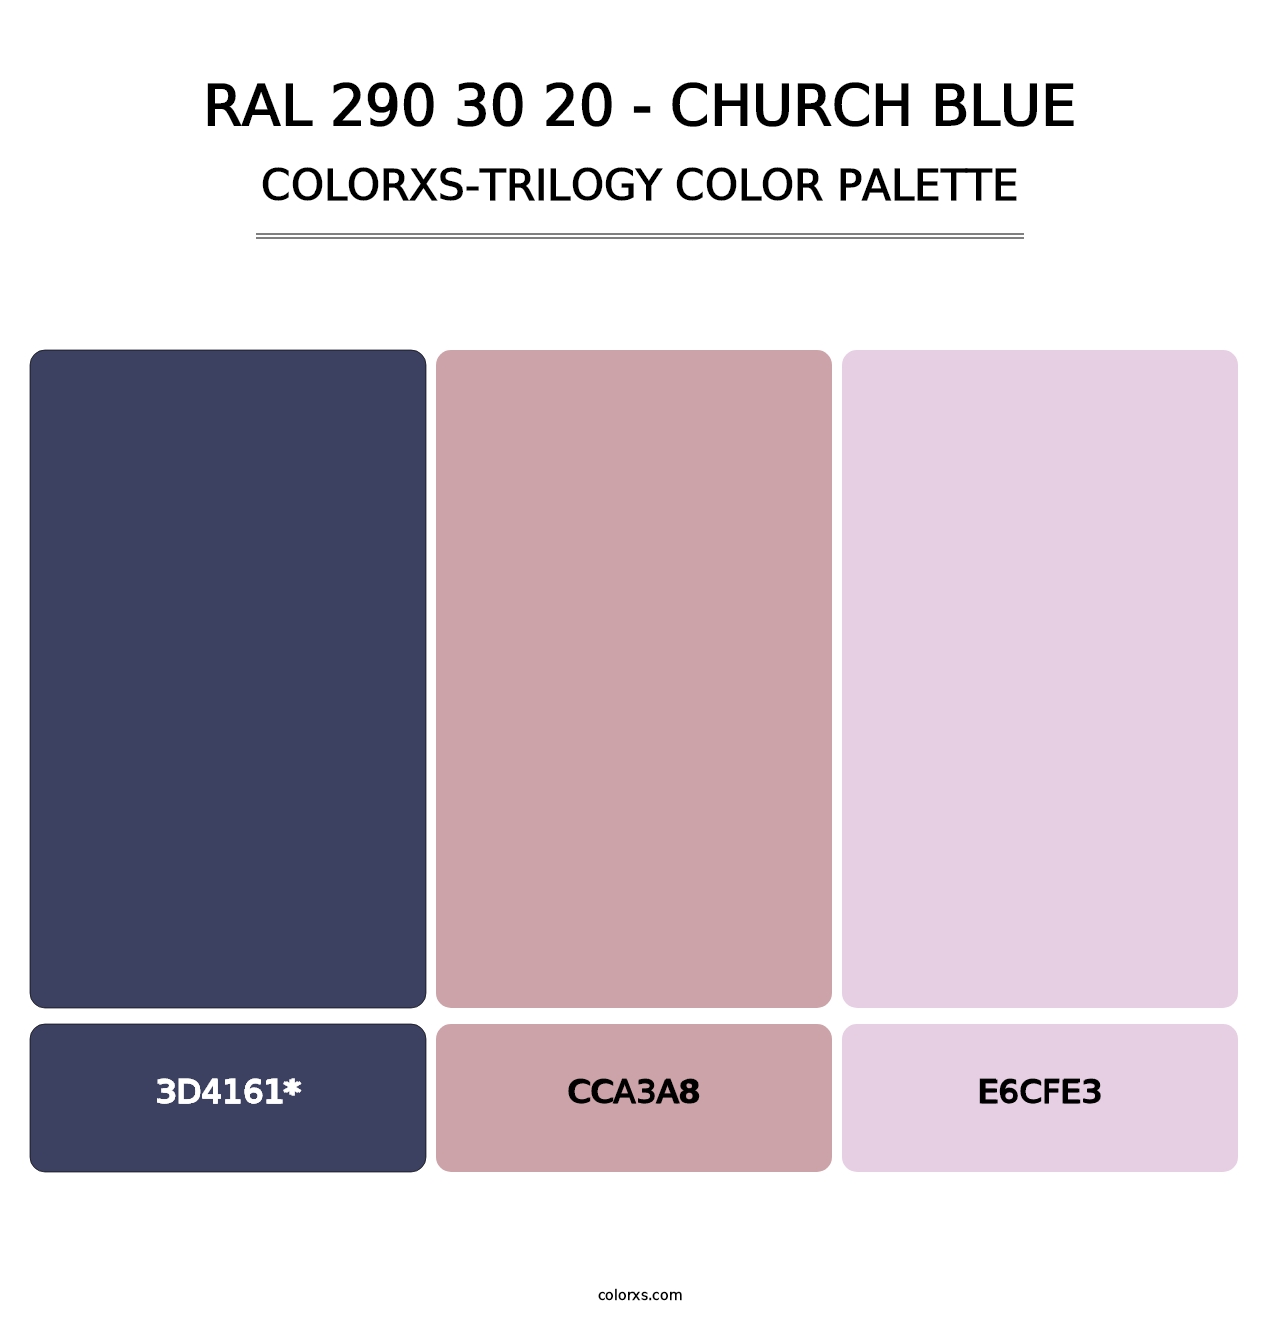 RAL 290 30 20 - Church Blue - Colorxs Trilogy Palette